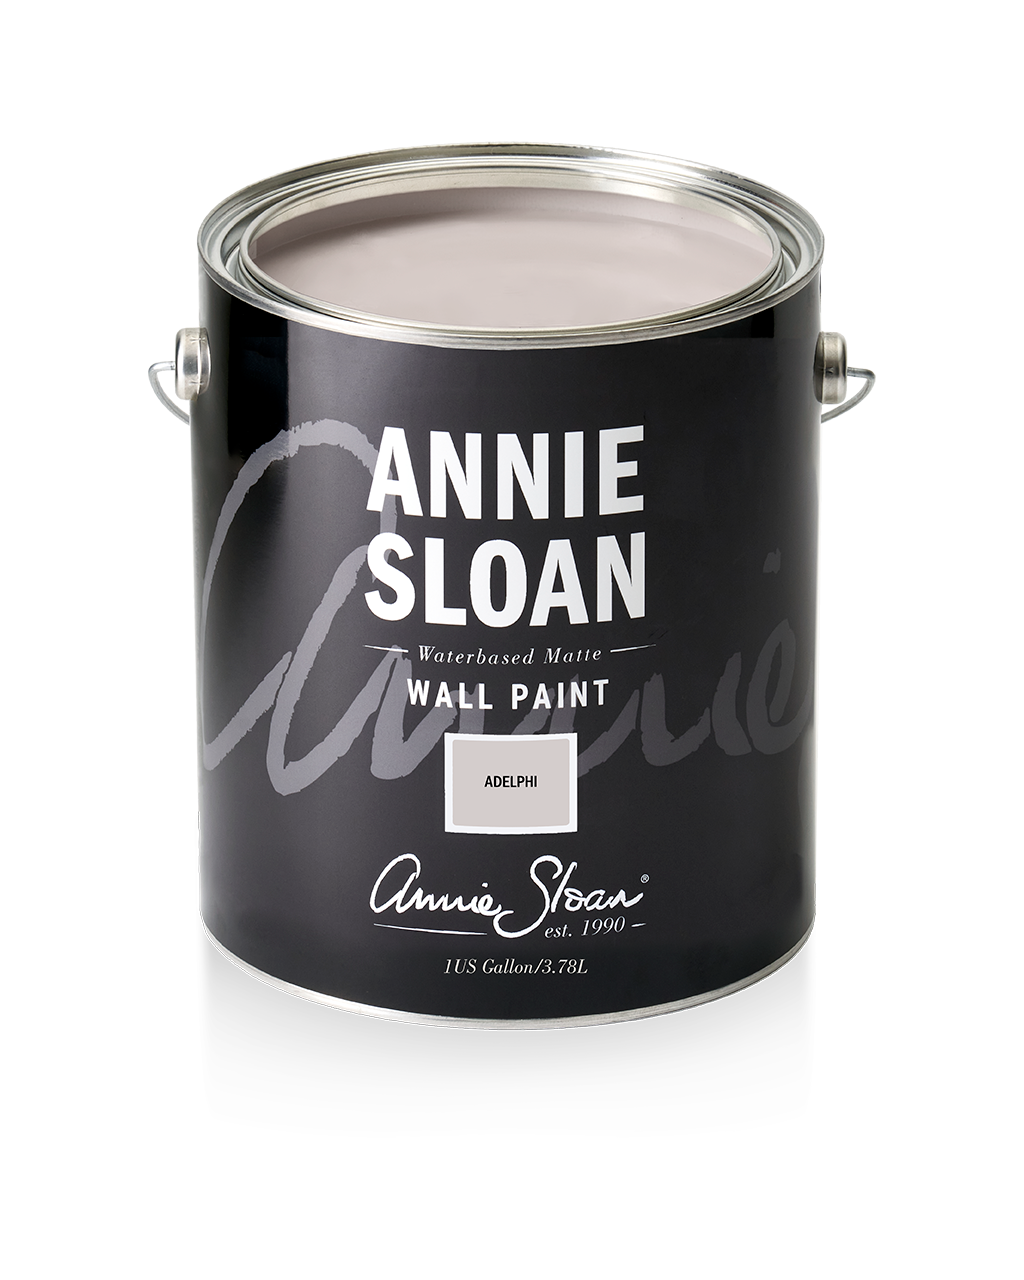 Annie Sloan Wall Paint Adelphi, 1 Gallon